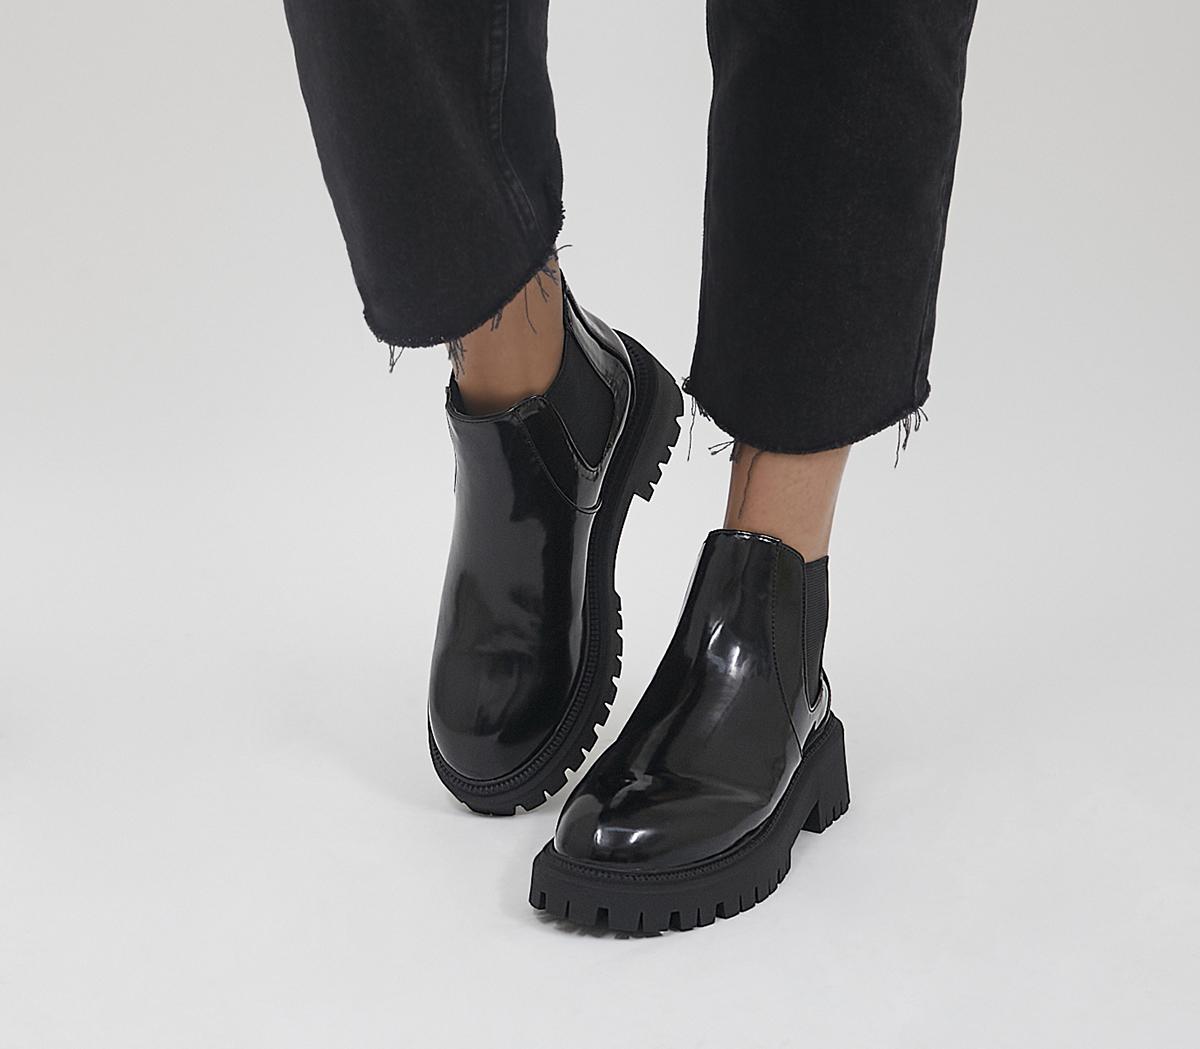 OFFICE Alexa Low Cut Chelsea Boots Black - Women's Ankle Boots